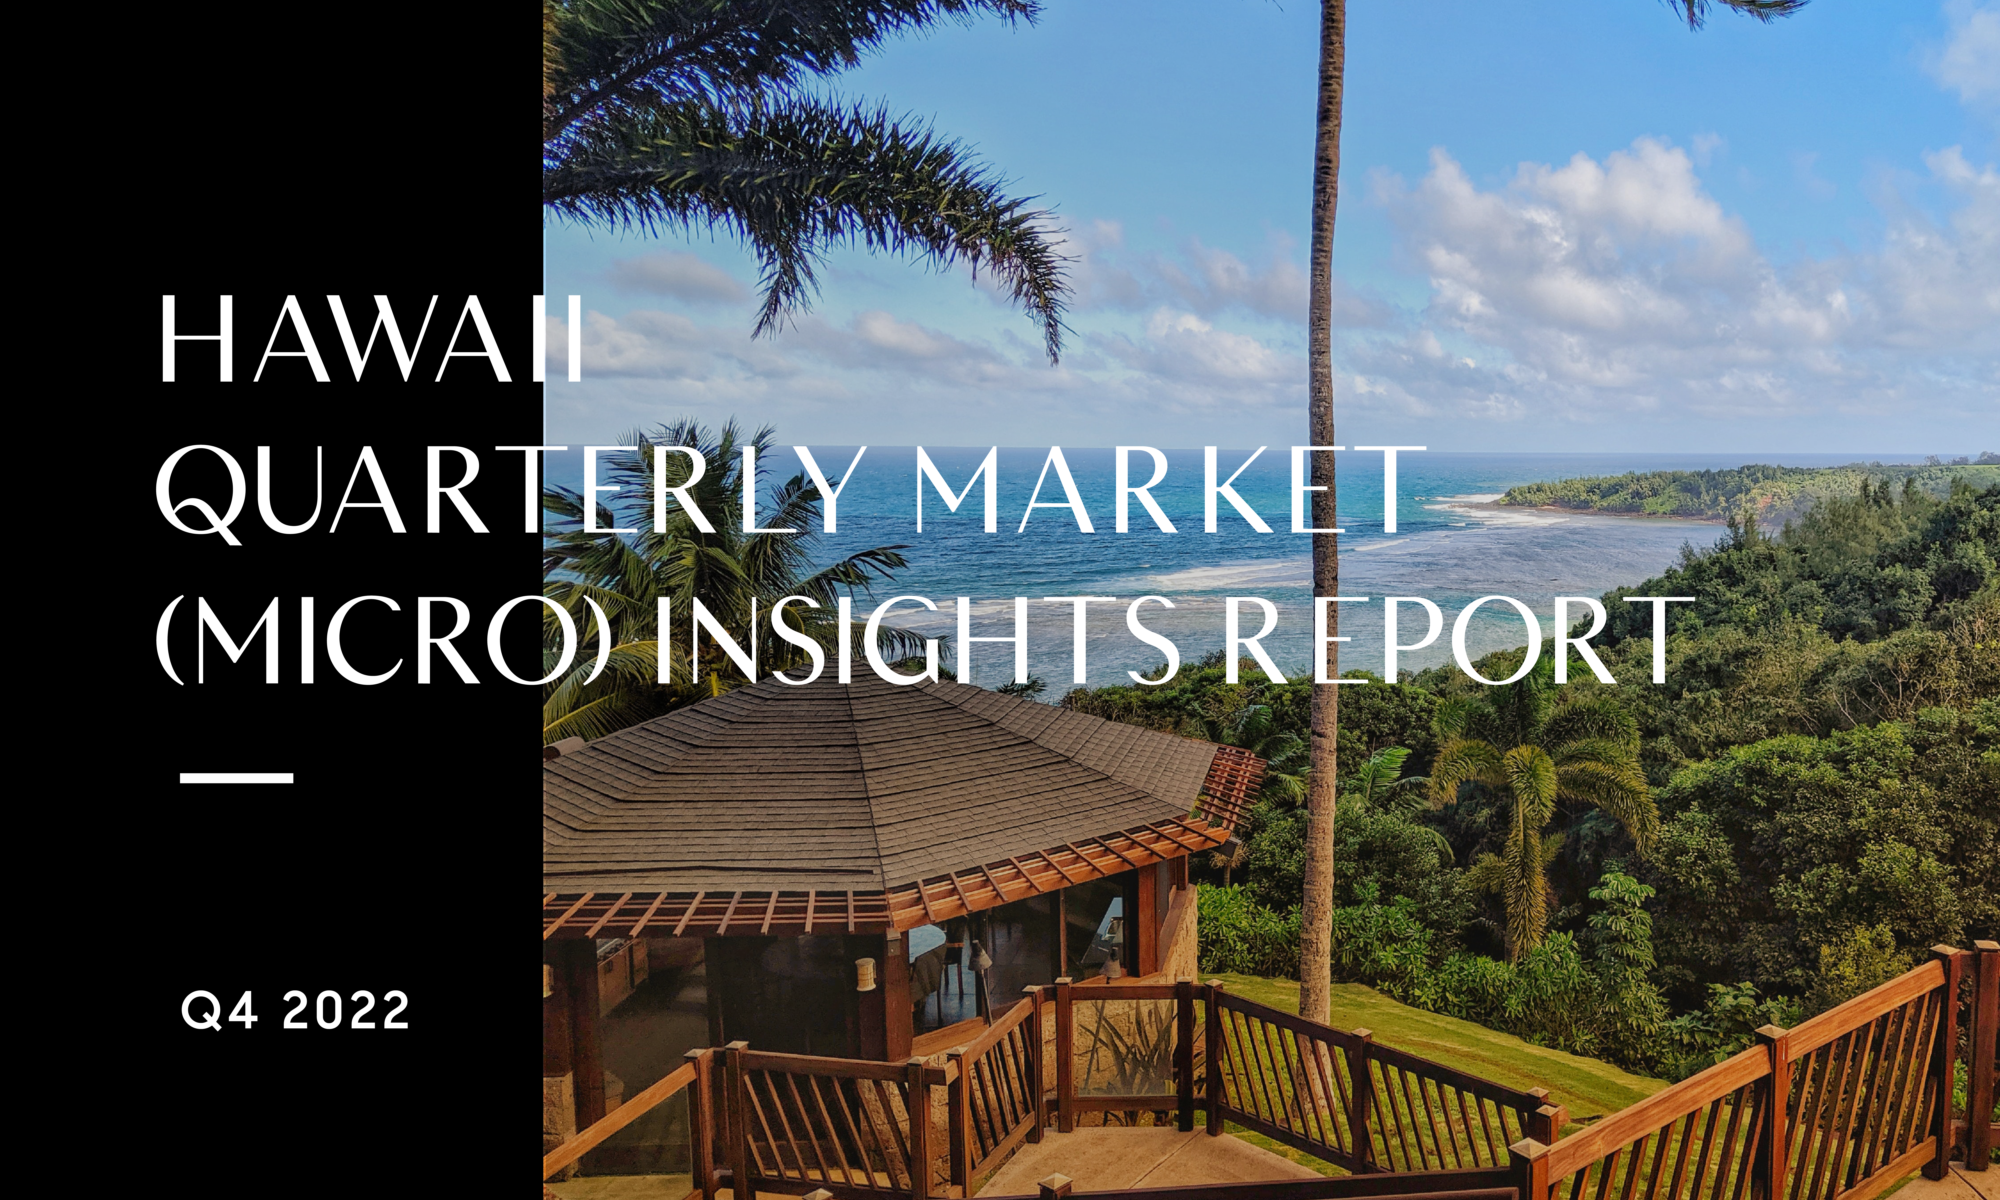 Hawaii Quarterly Market (Micro) Insights Report: Q4 2022